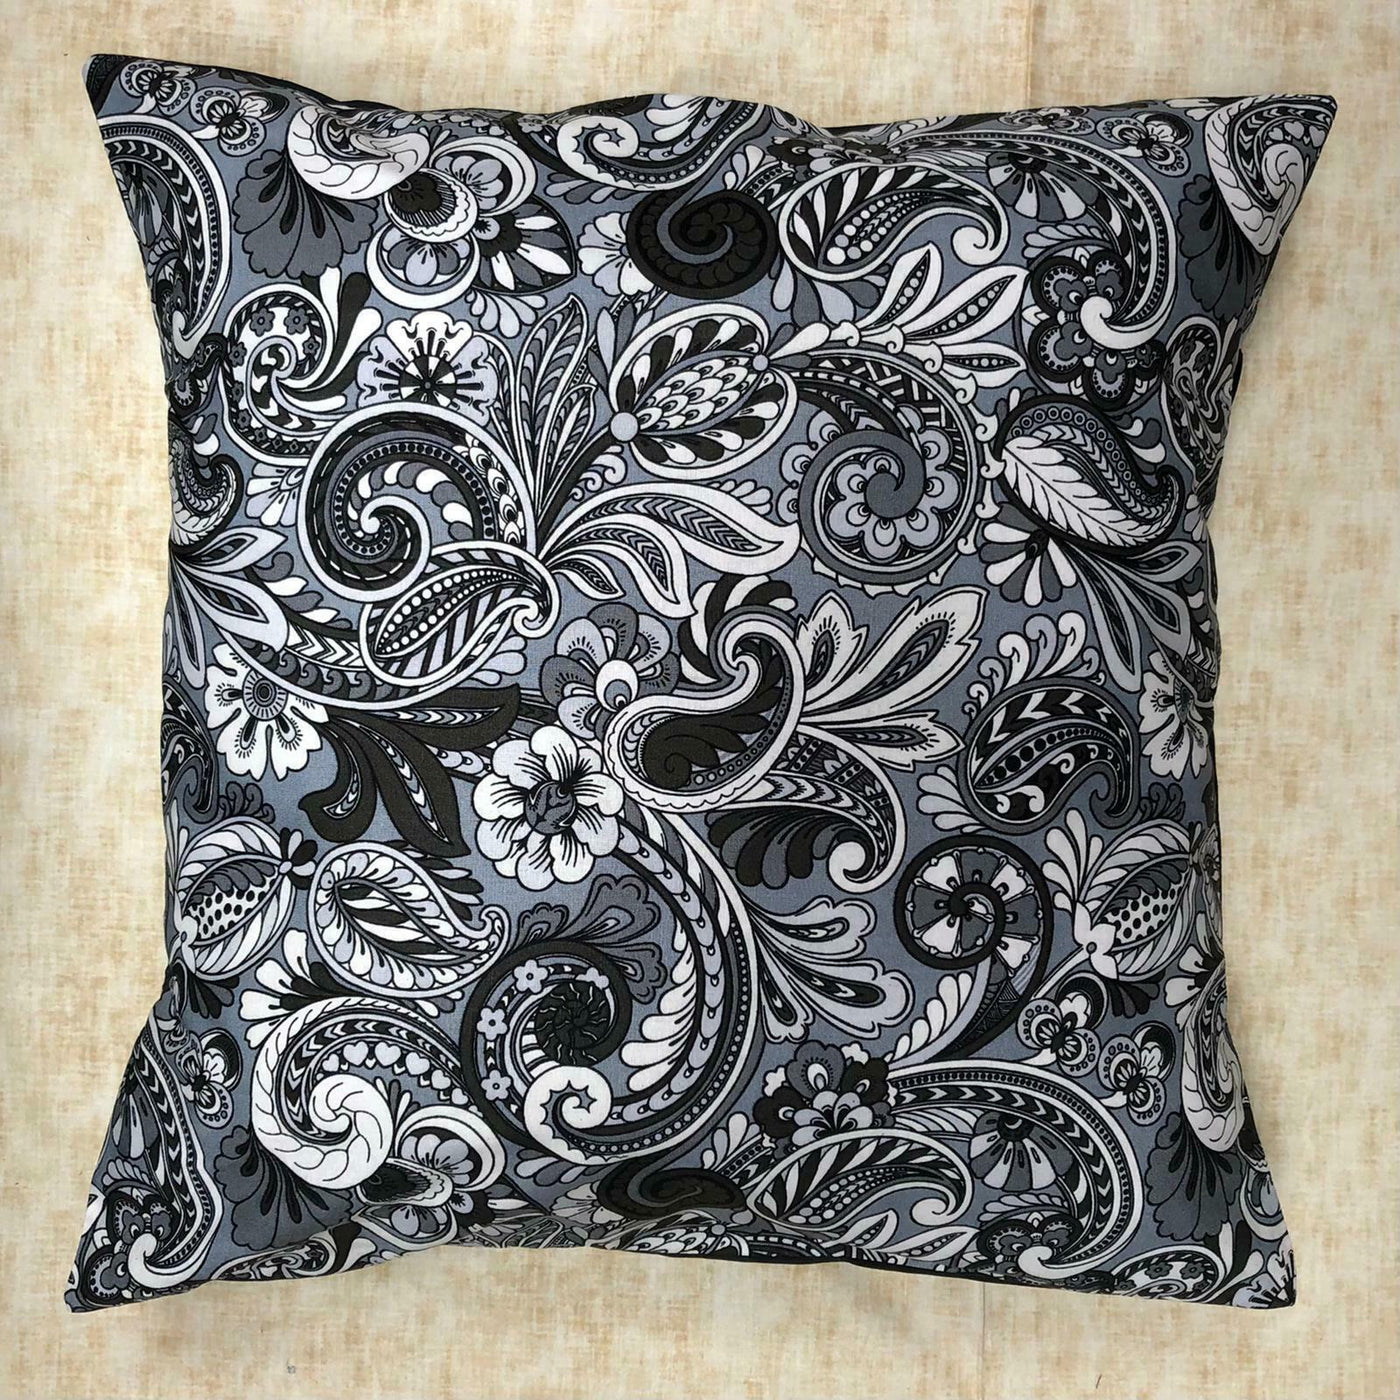 Paisley Baroque Mandala Cushion Cover Decorative Case fits 18" x 18" Cotton